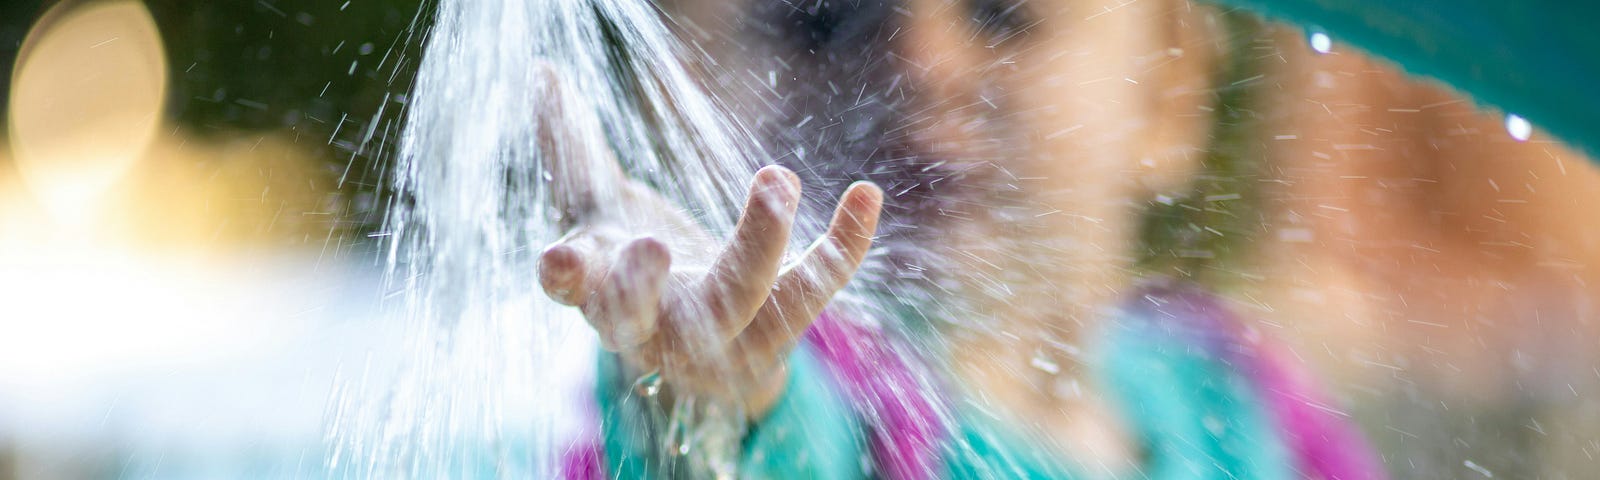 a little girl touching splashing water